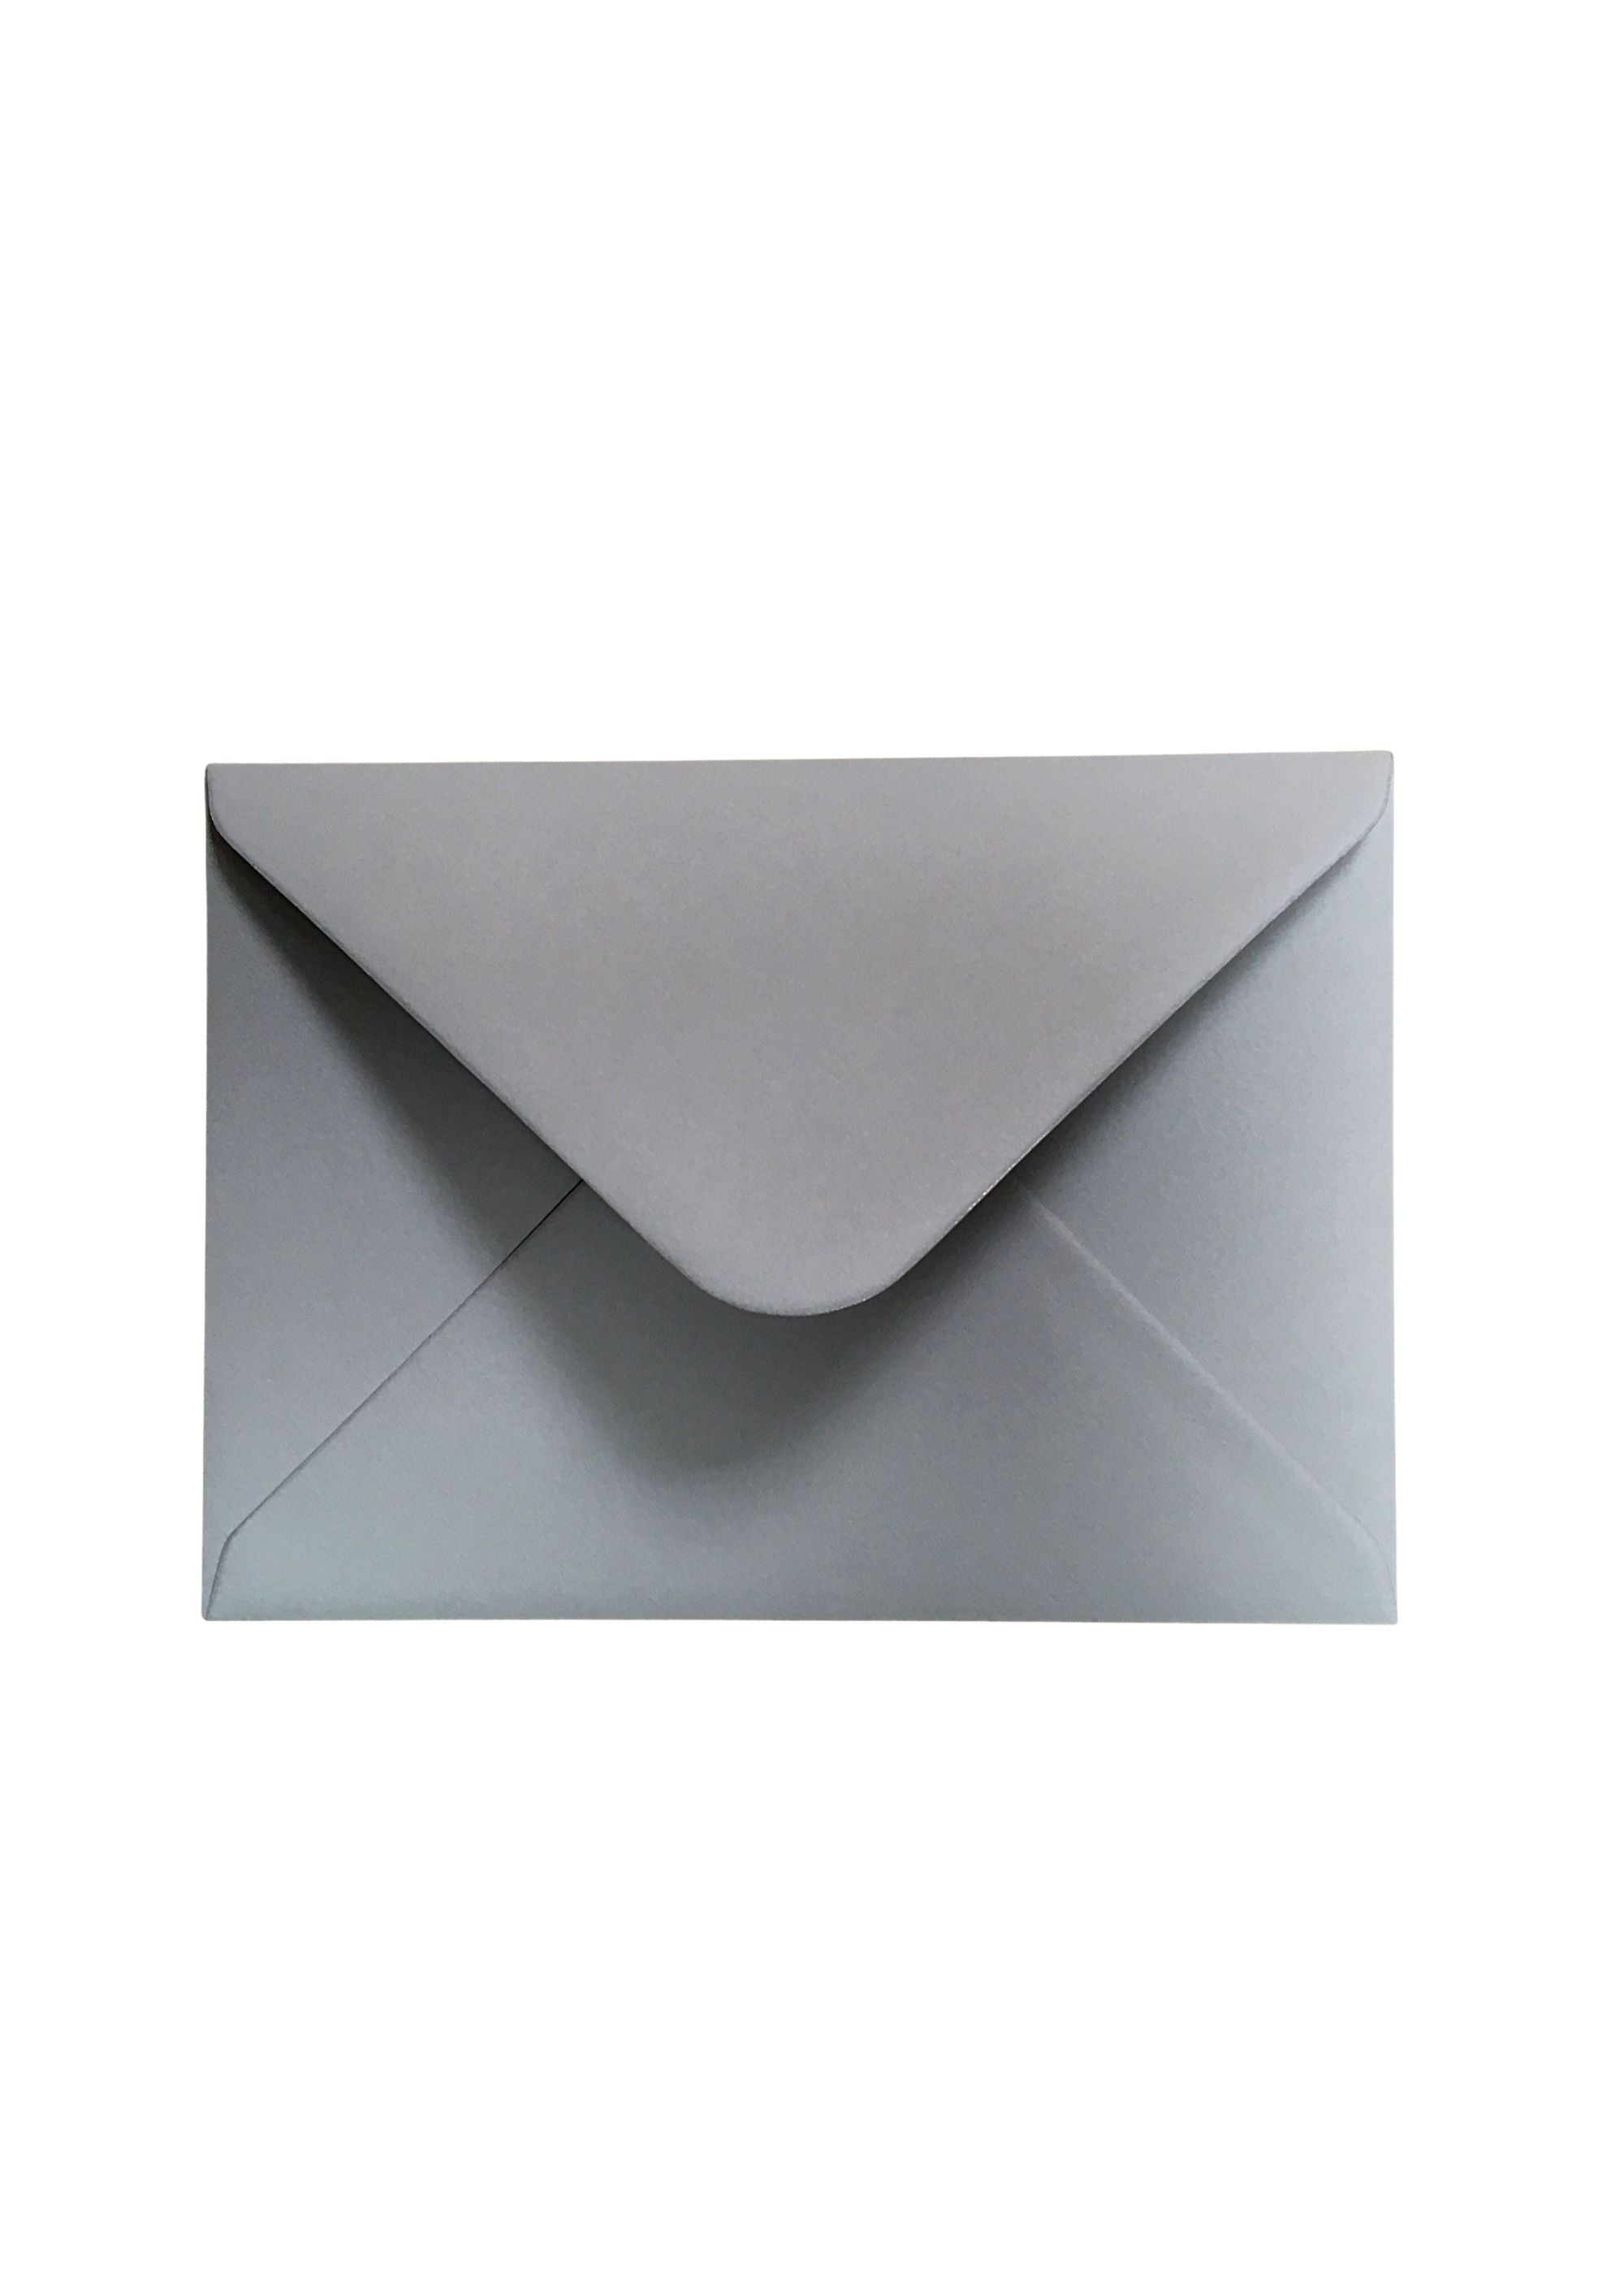 Colorplan Real Grey Envelope - Liberties Papers